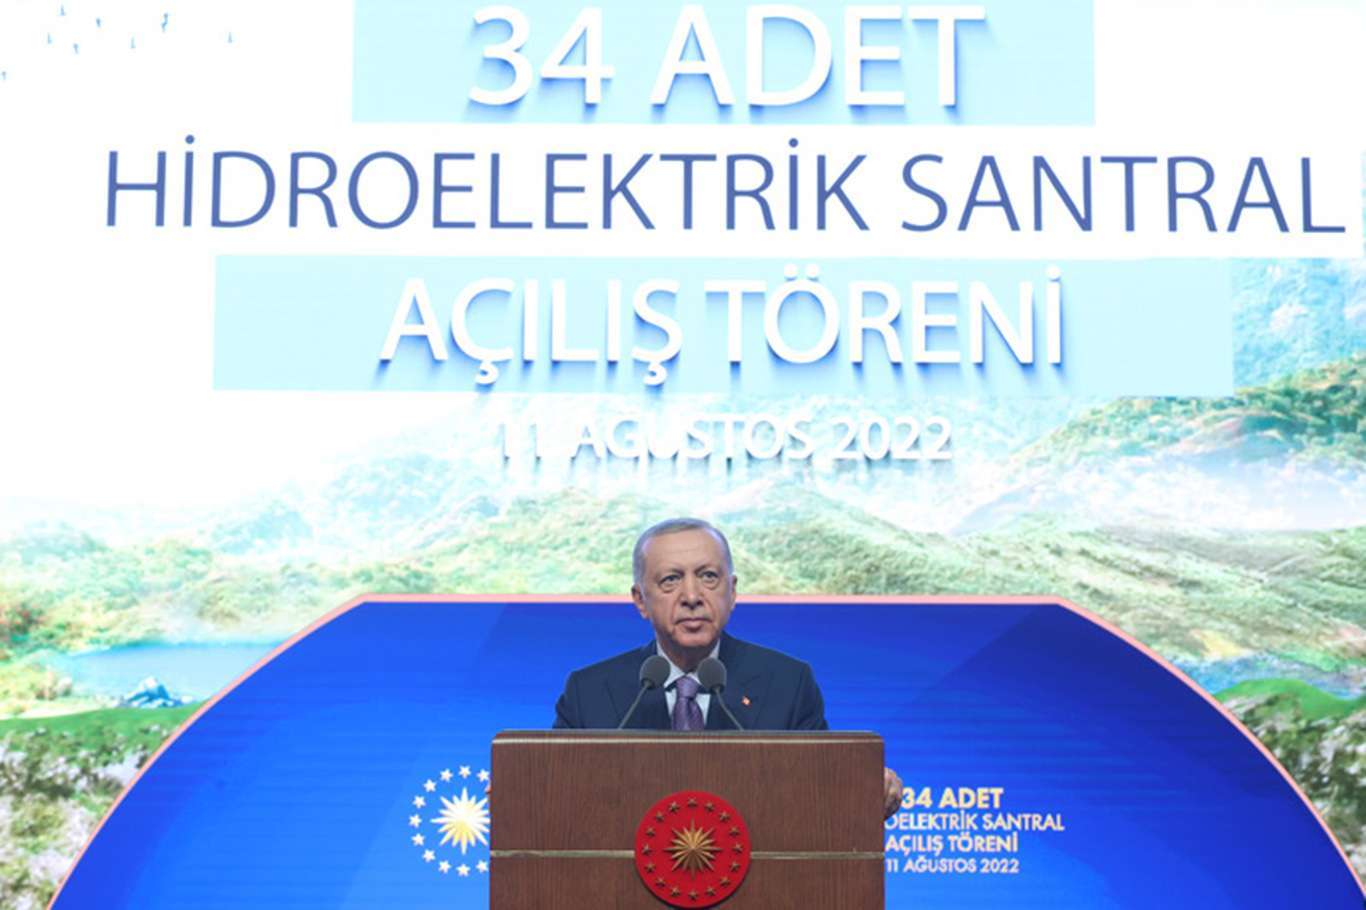 Türkiye’s Erdoğan inaugurates 34 hydroelectric power plants